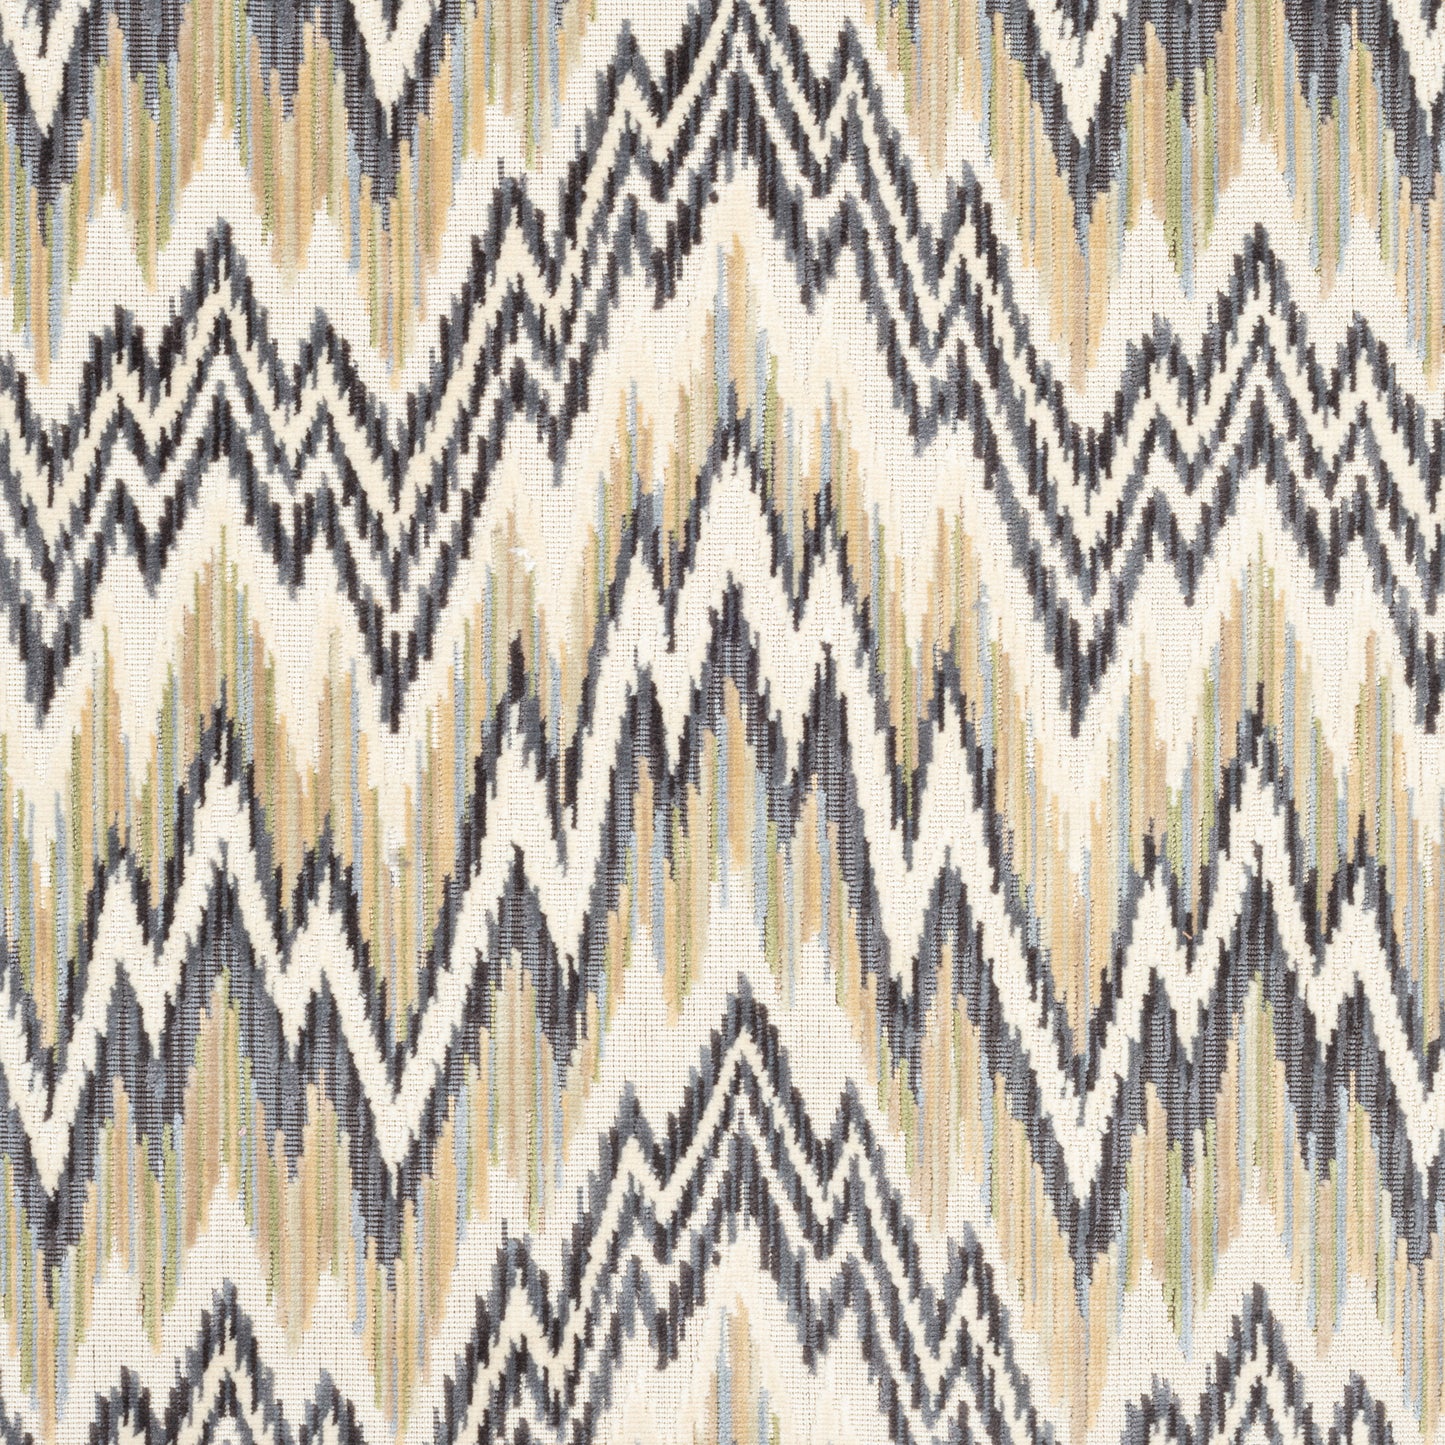 Purchase Thibaut Fabric SKU# W72819 pattern name Rhythm Velvet color Grain and Black